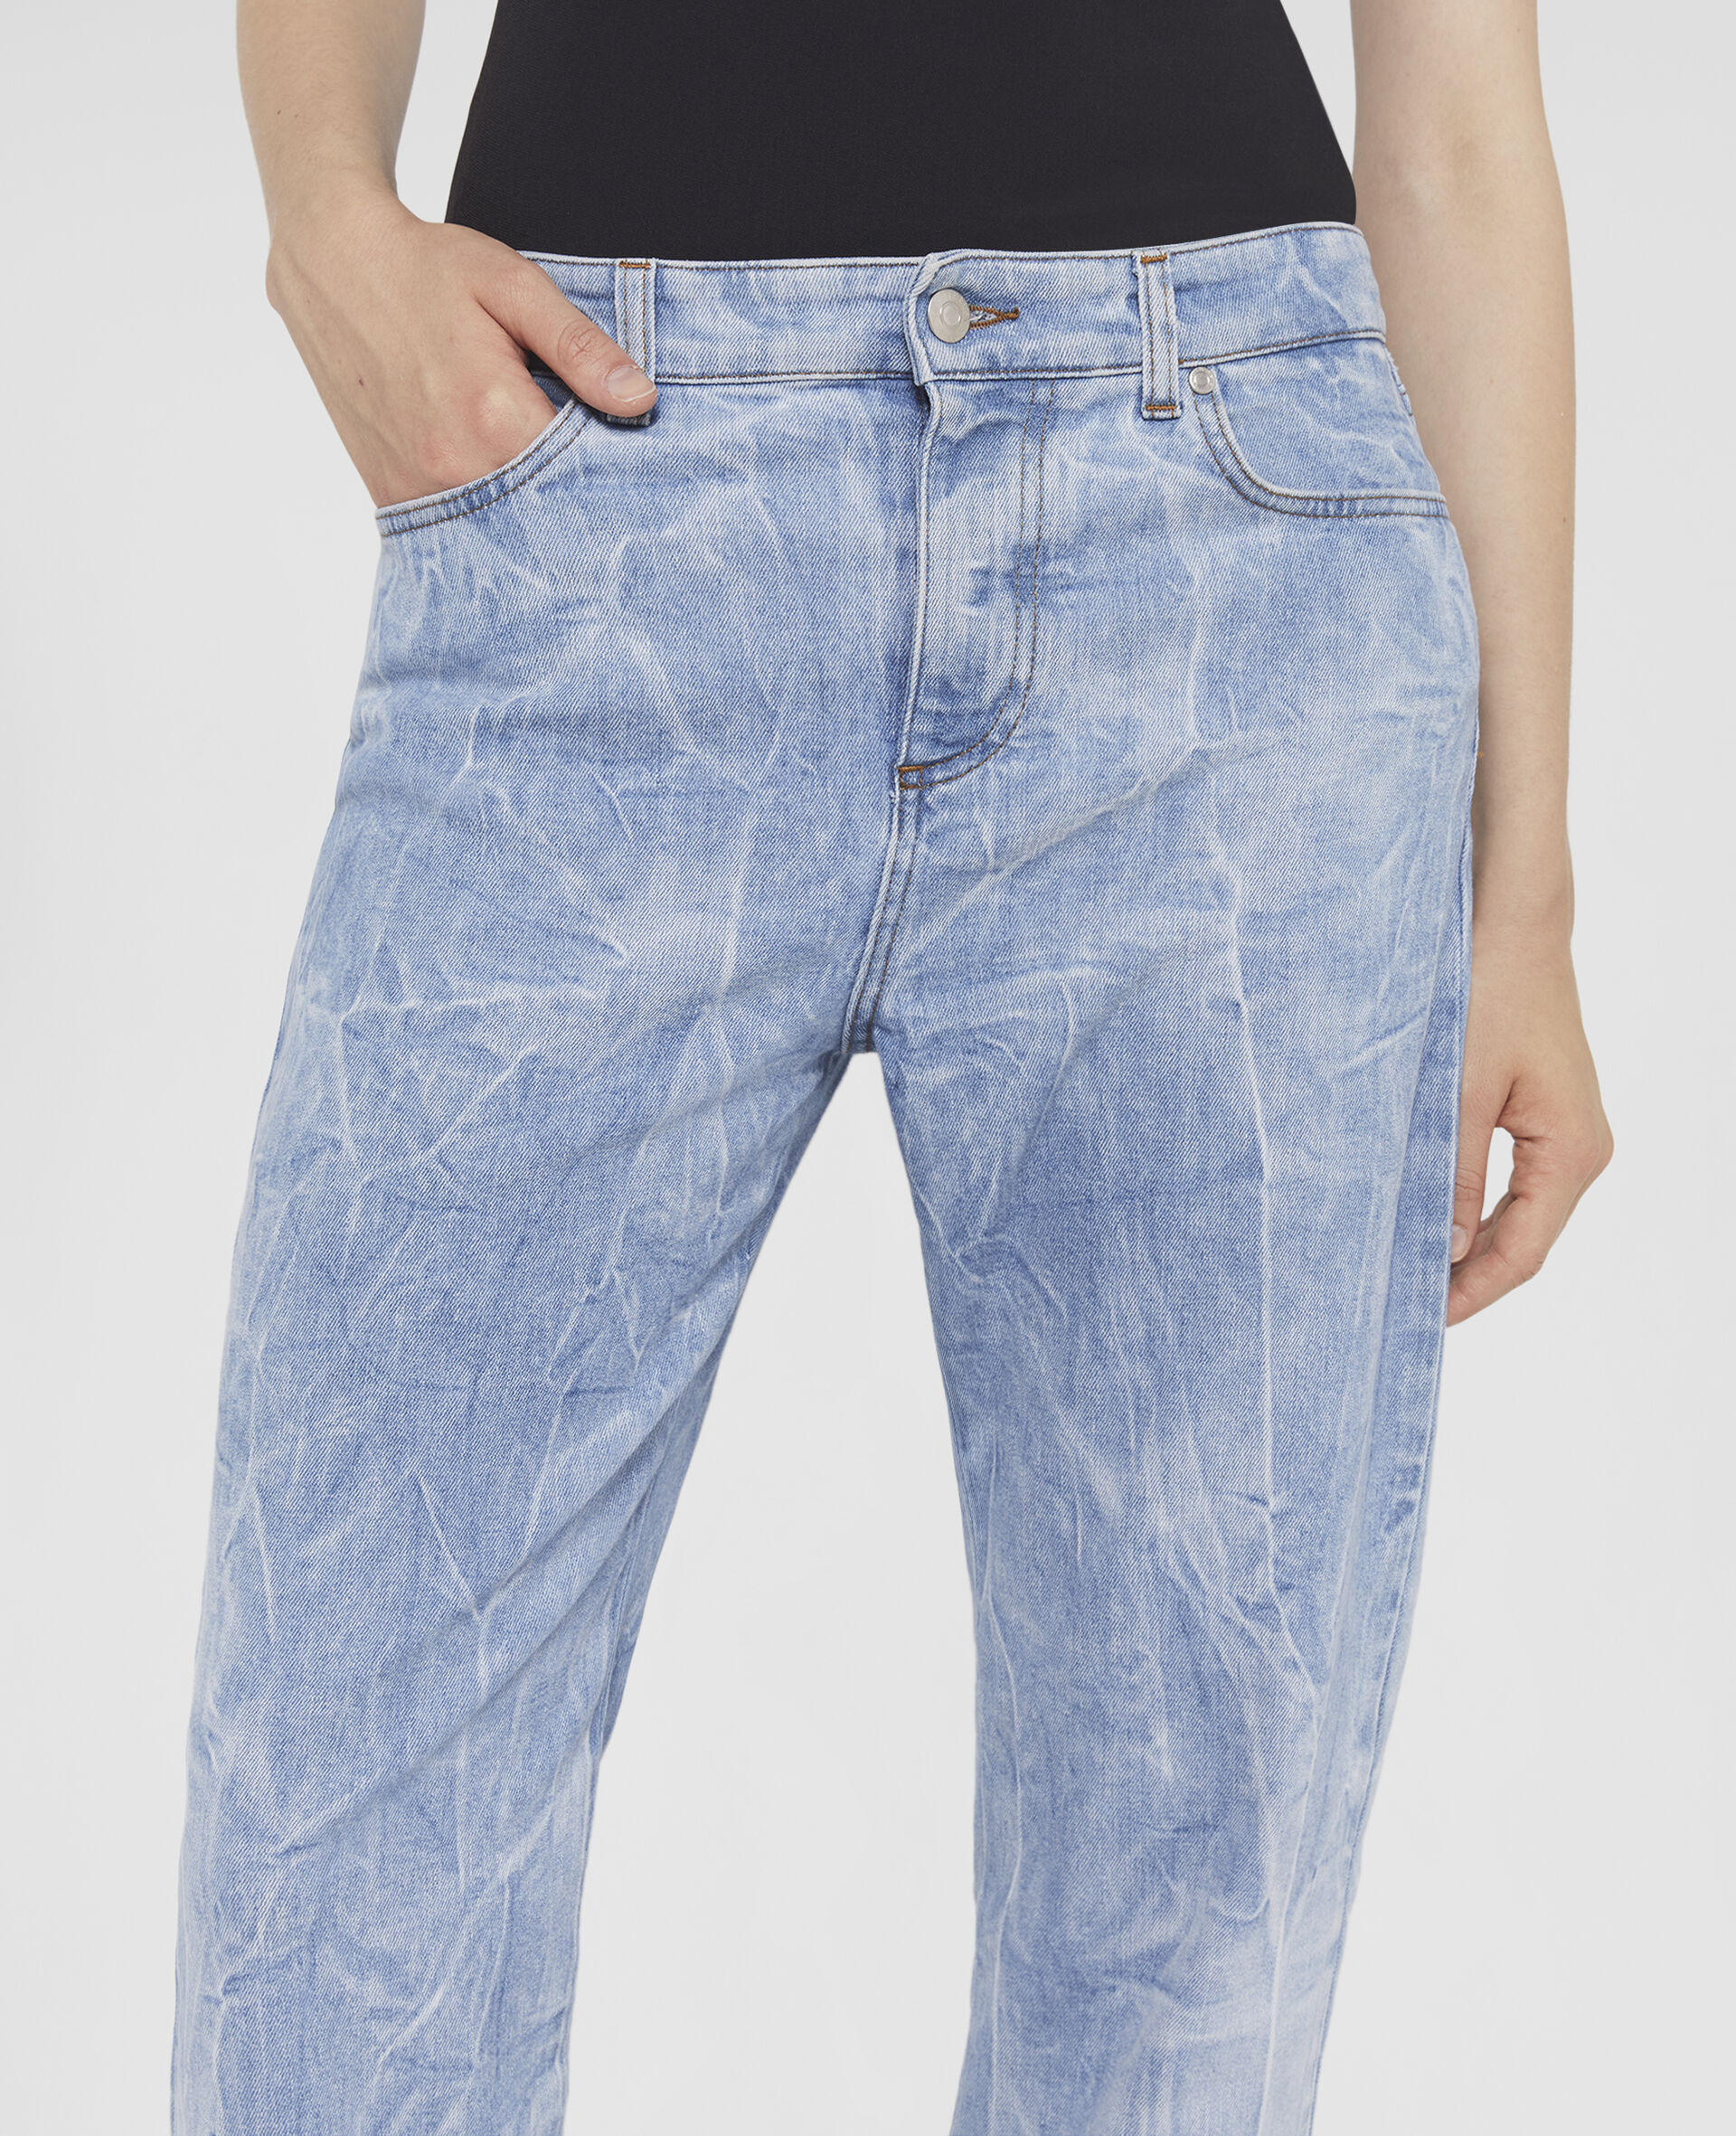 Crinkle Wash Straight Leg Jeans-Blue-large image number 3